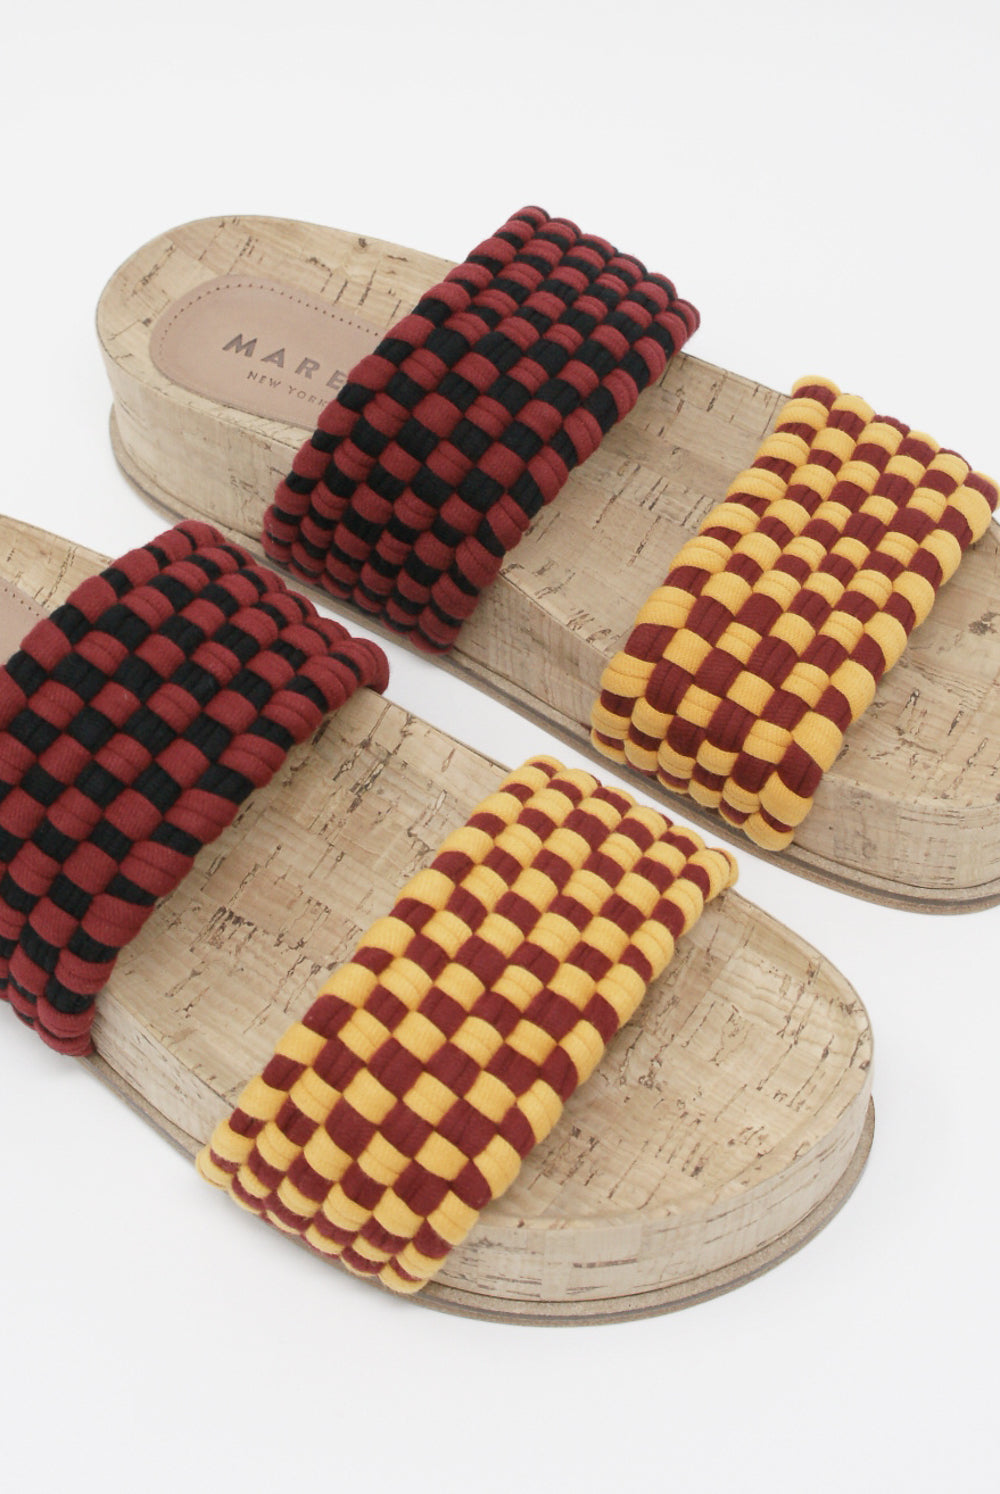 Marea - Dobla Banda Cork Sandal in Burgundy/Mustard woven strap detail